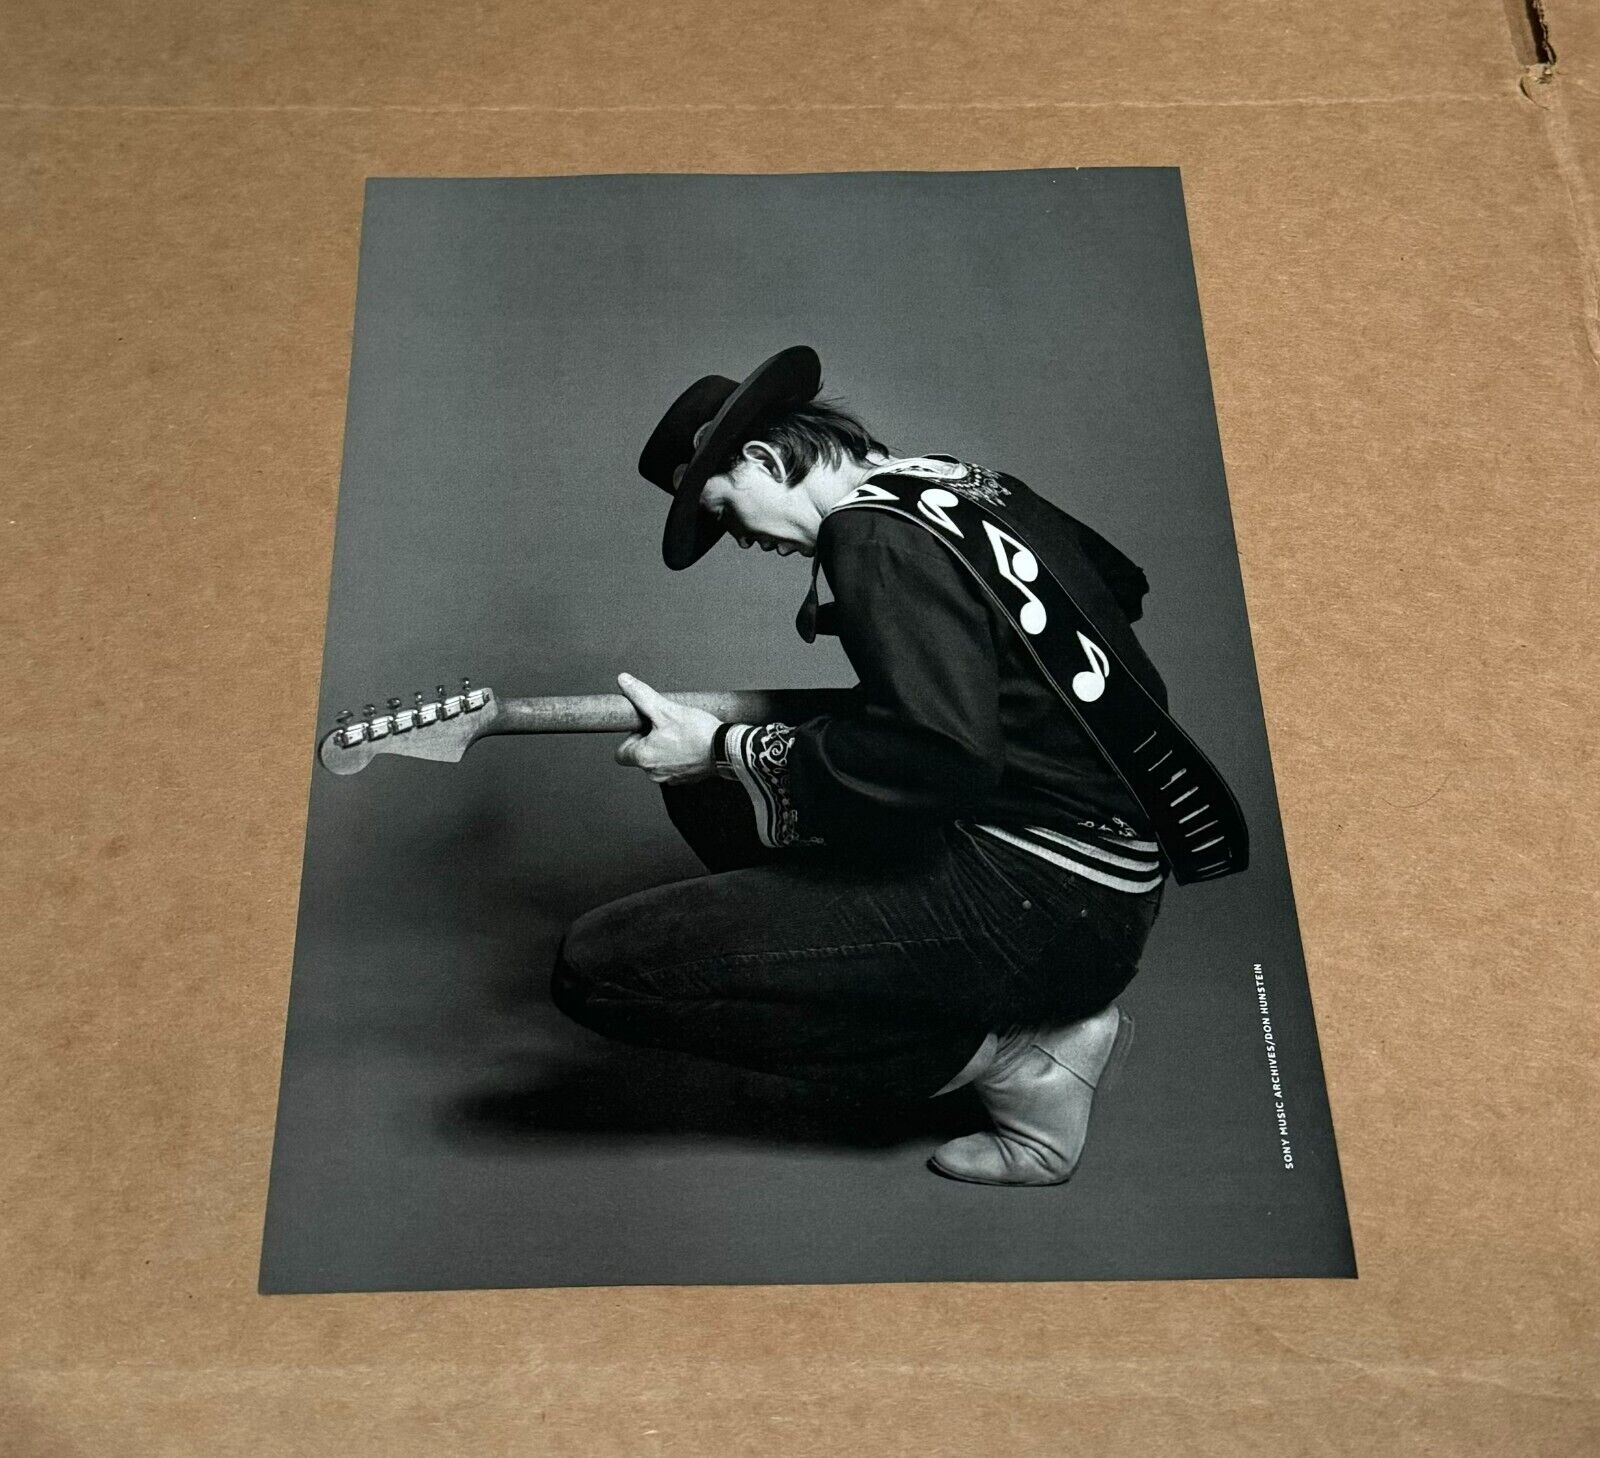 Stevie Ray Vaughan - SRV - Music Print Ad B&W Photo - 2013